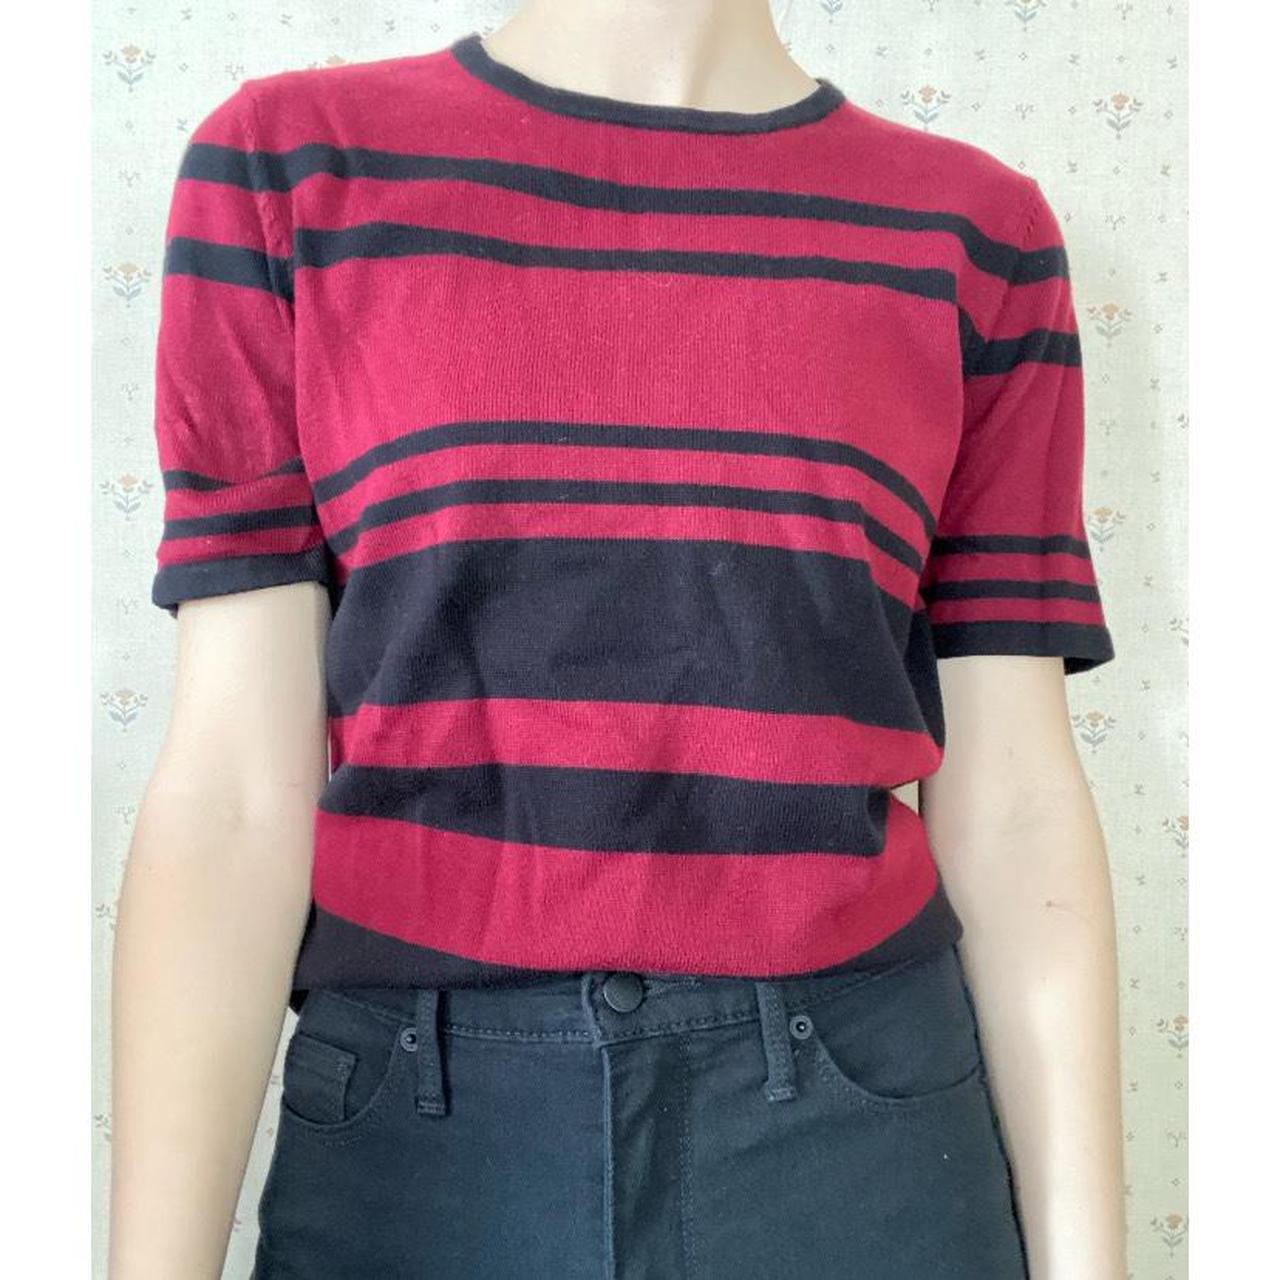 Maroon/black striped shirt and cardigan set. Size... - Depop